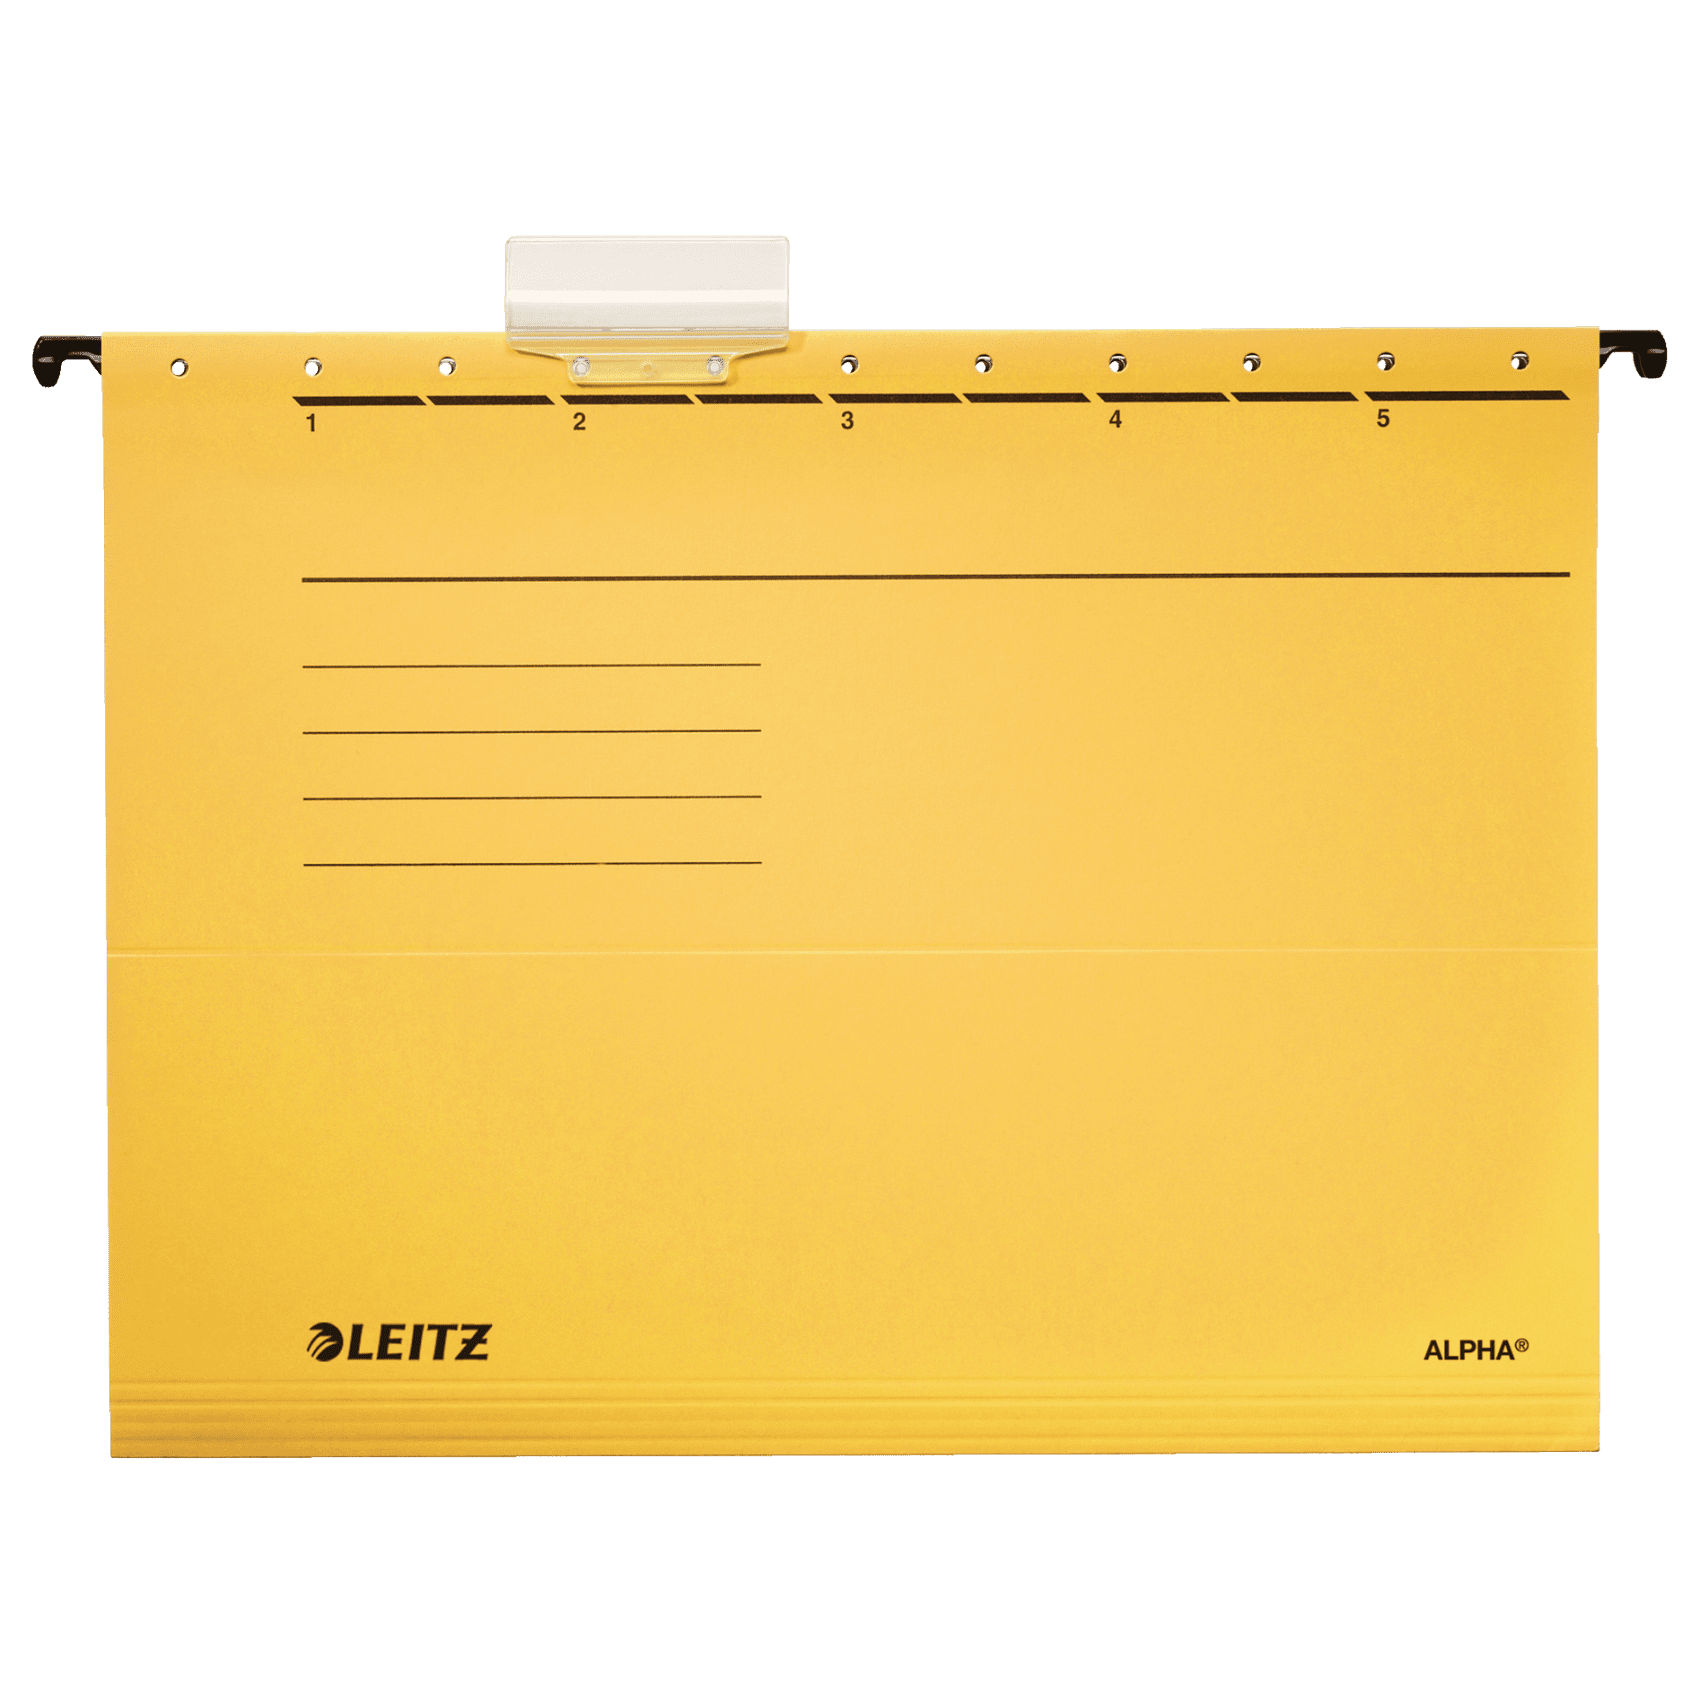 Závěsné desky Leitz Alpha typu "V", žluté